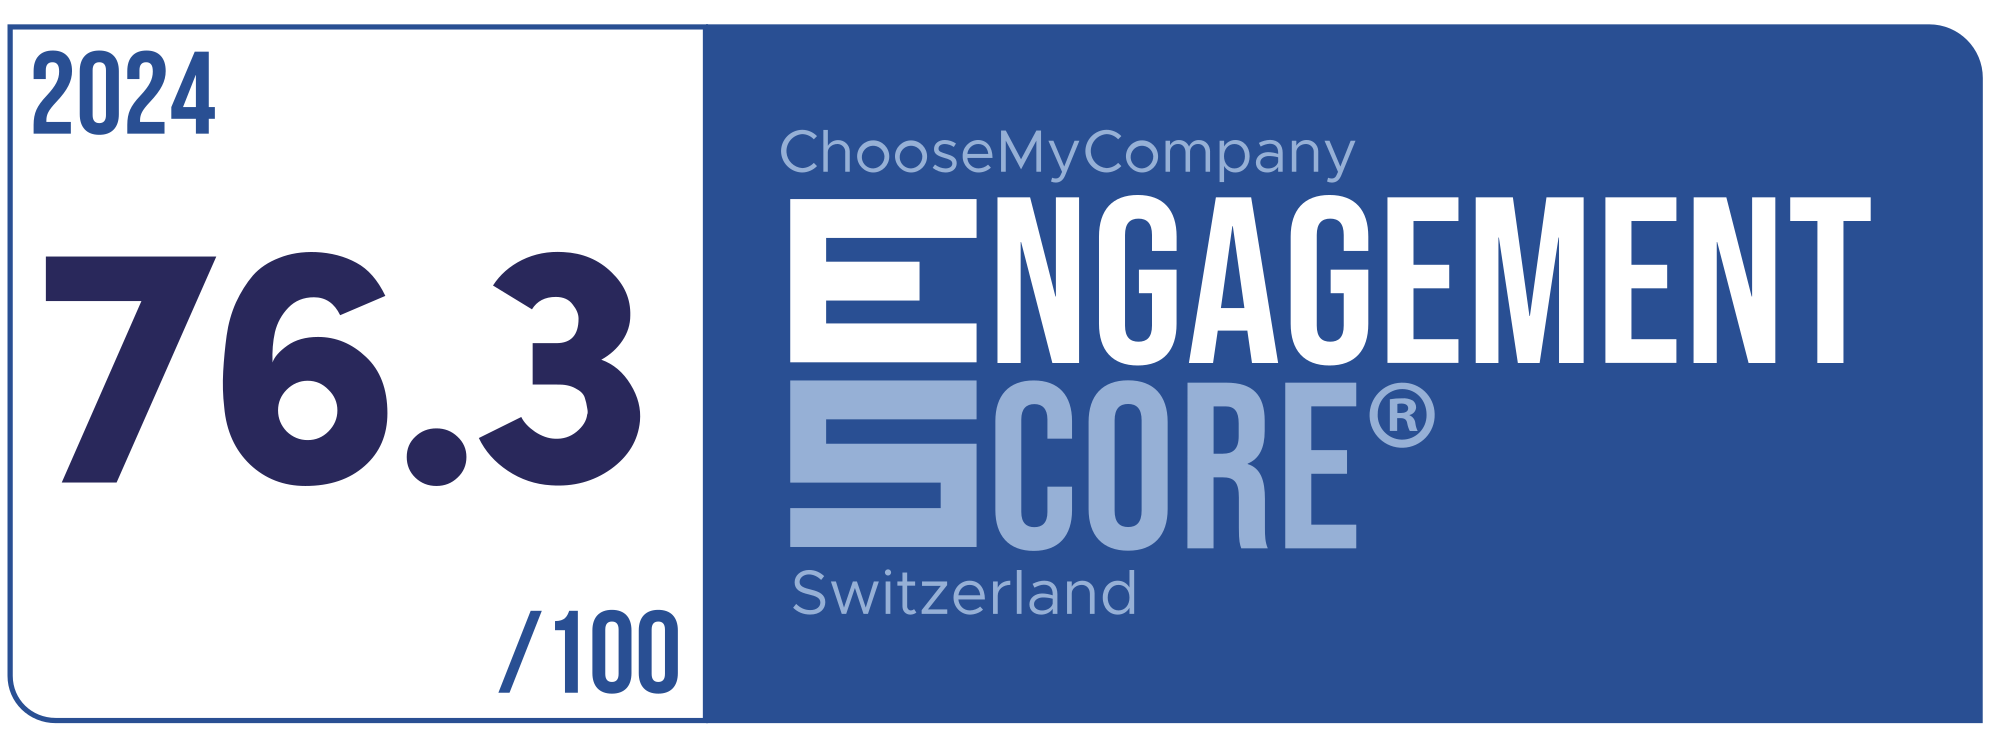 Label Engagement Score 2024 Switzerland